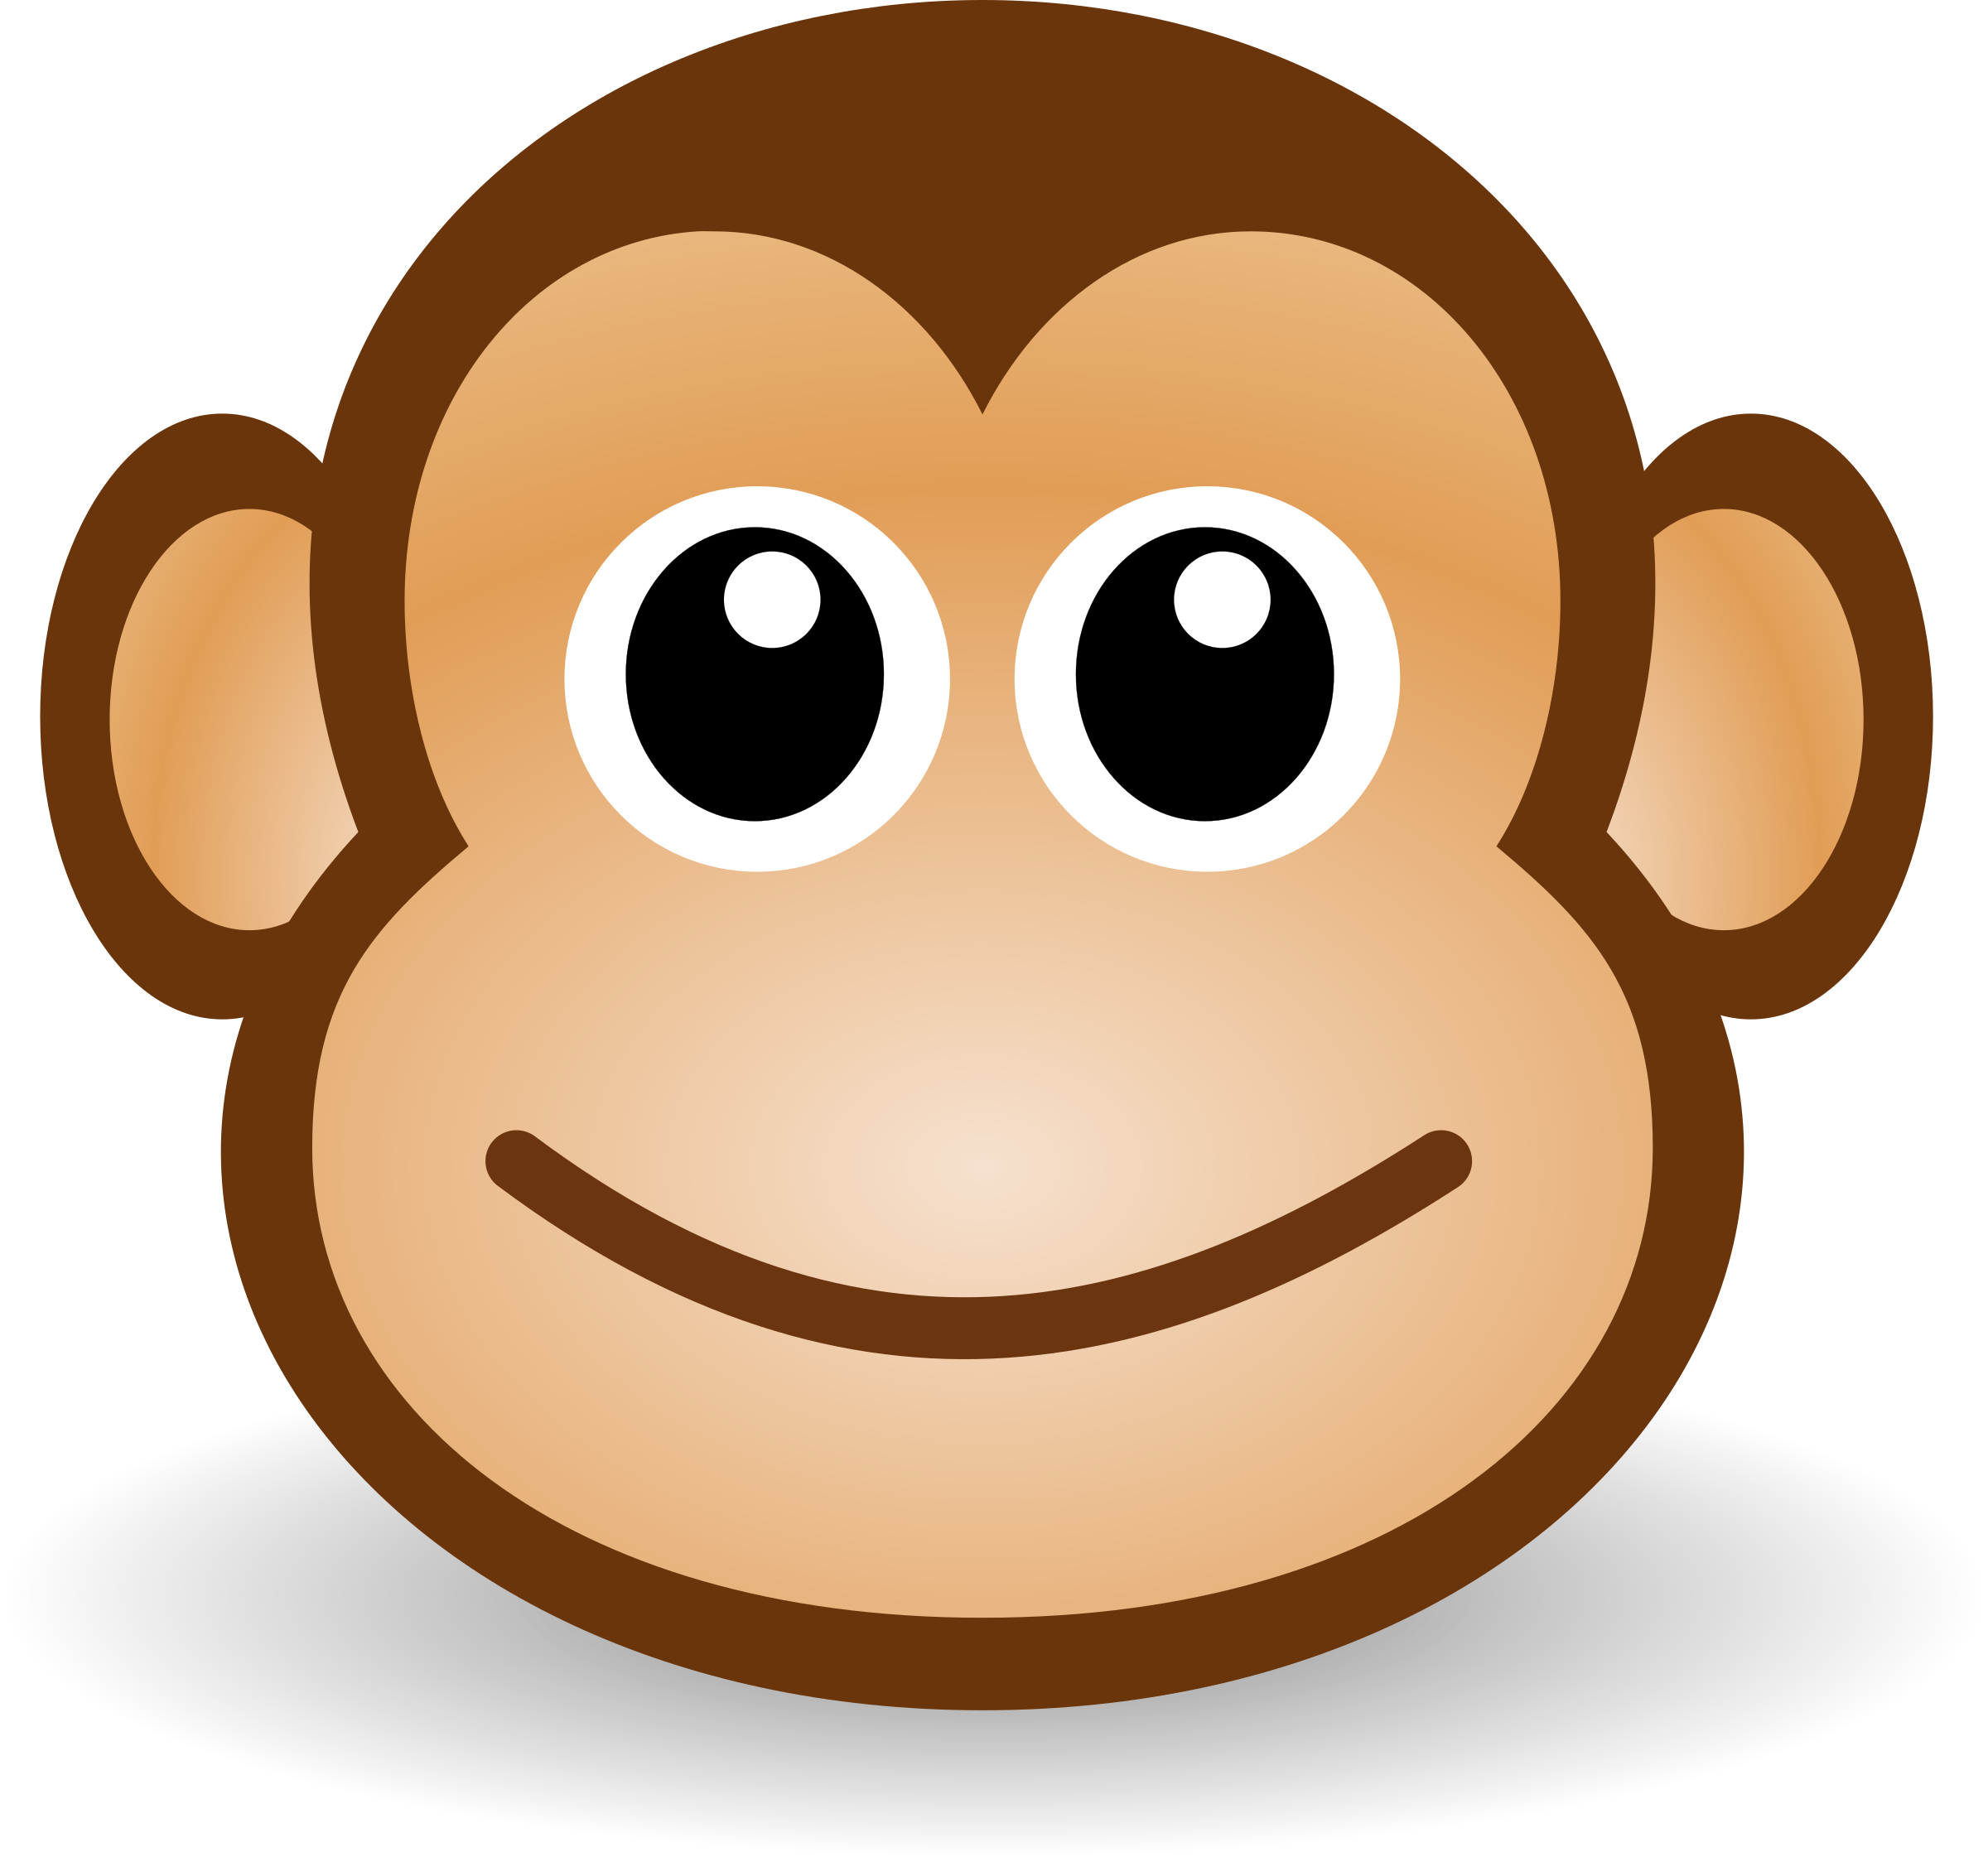 Funny face by martouf. Emoji clipart monkey